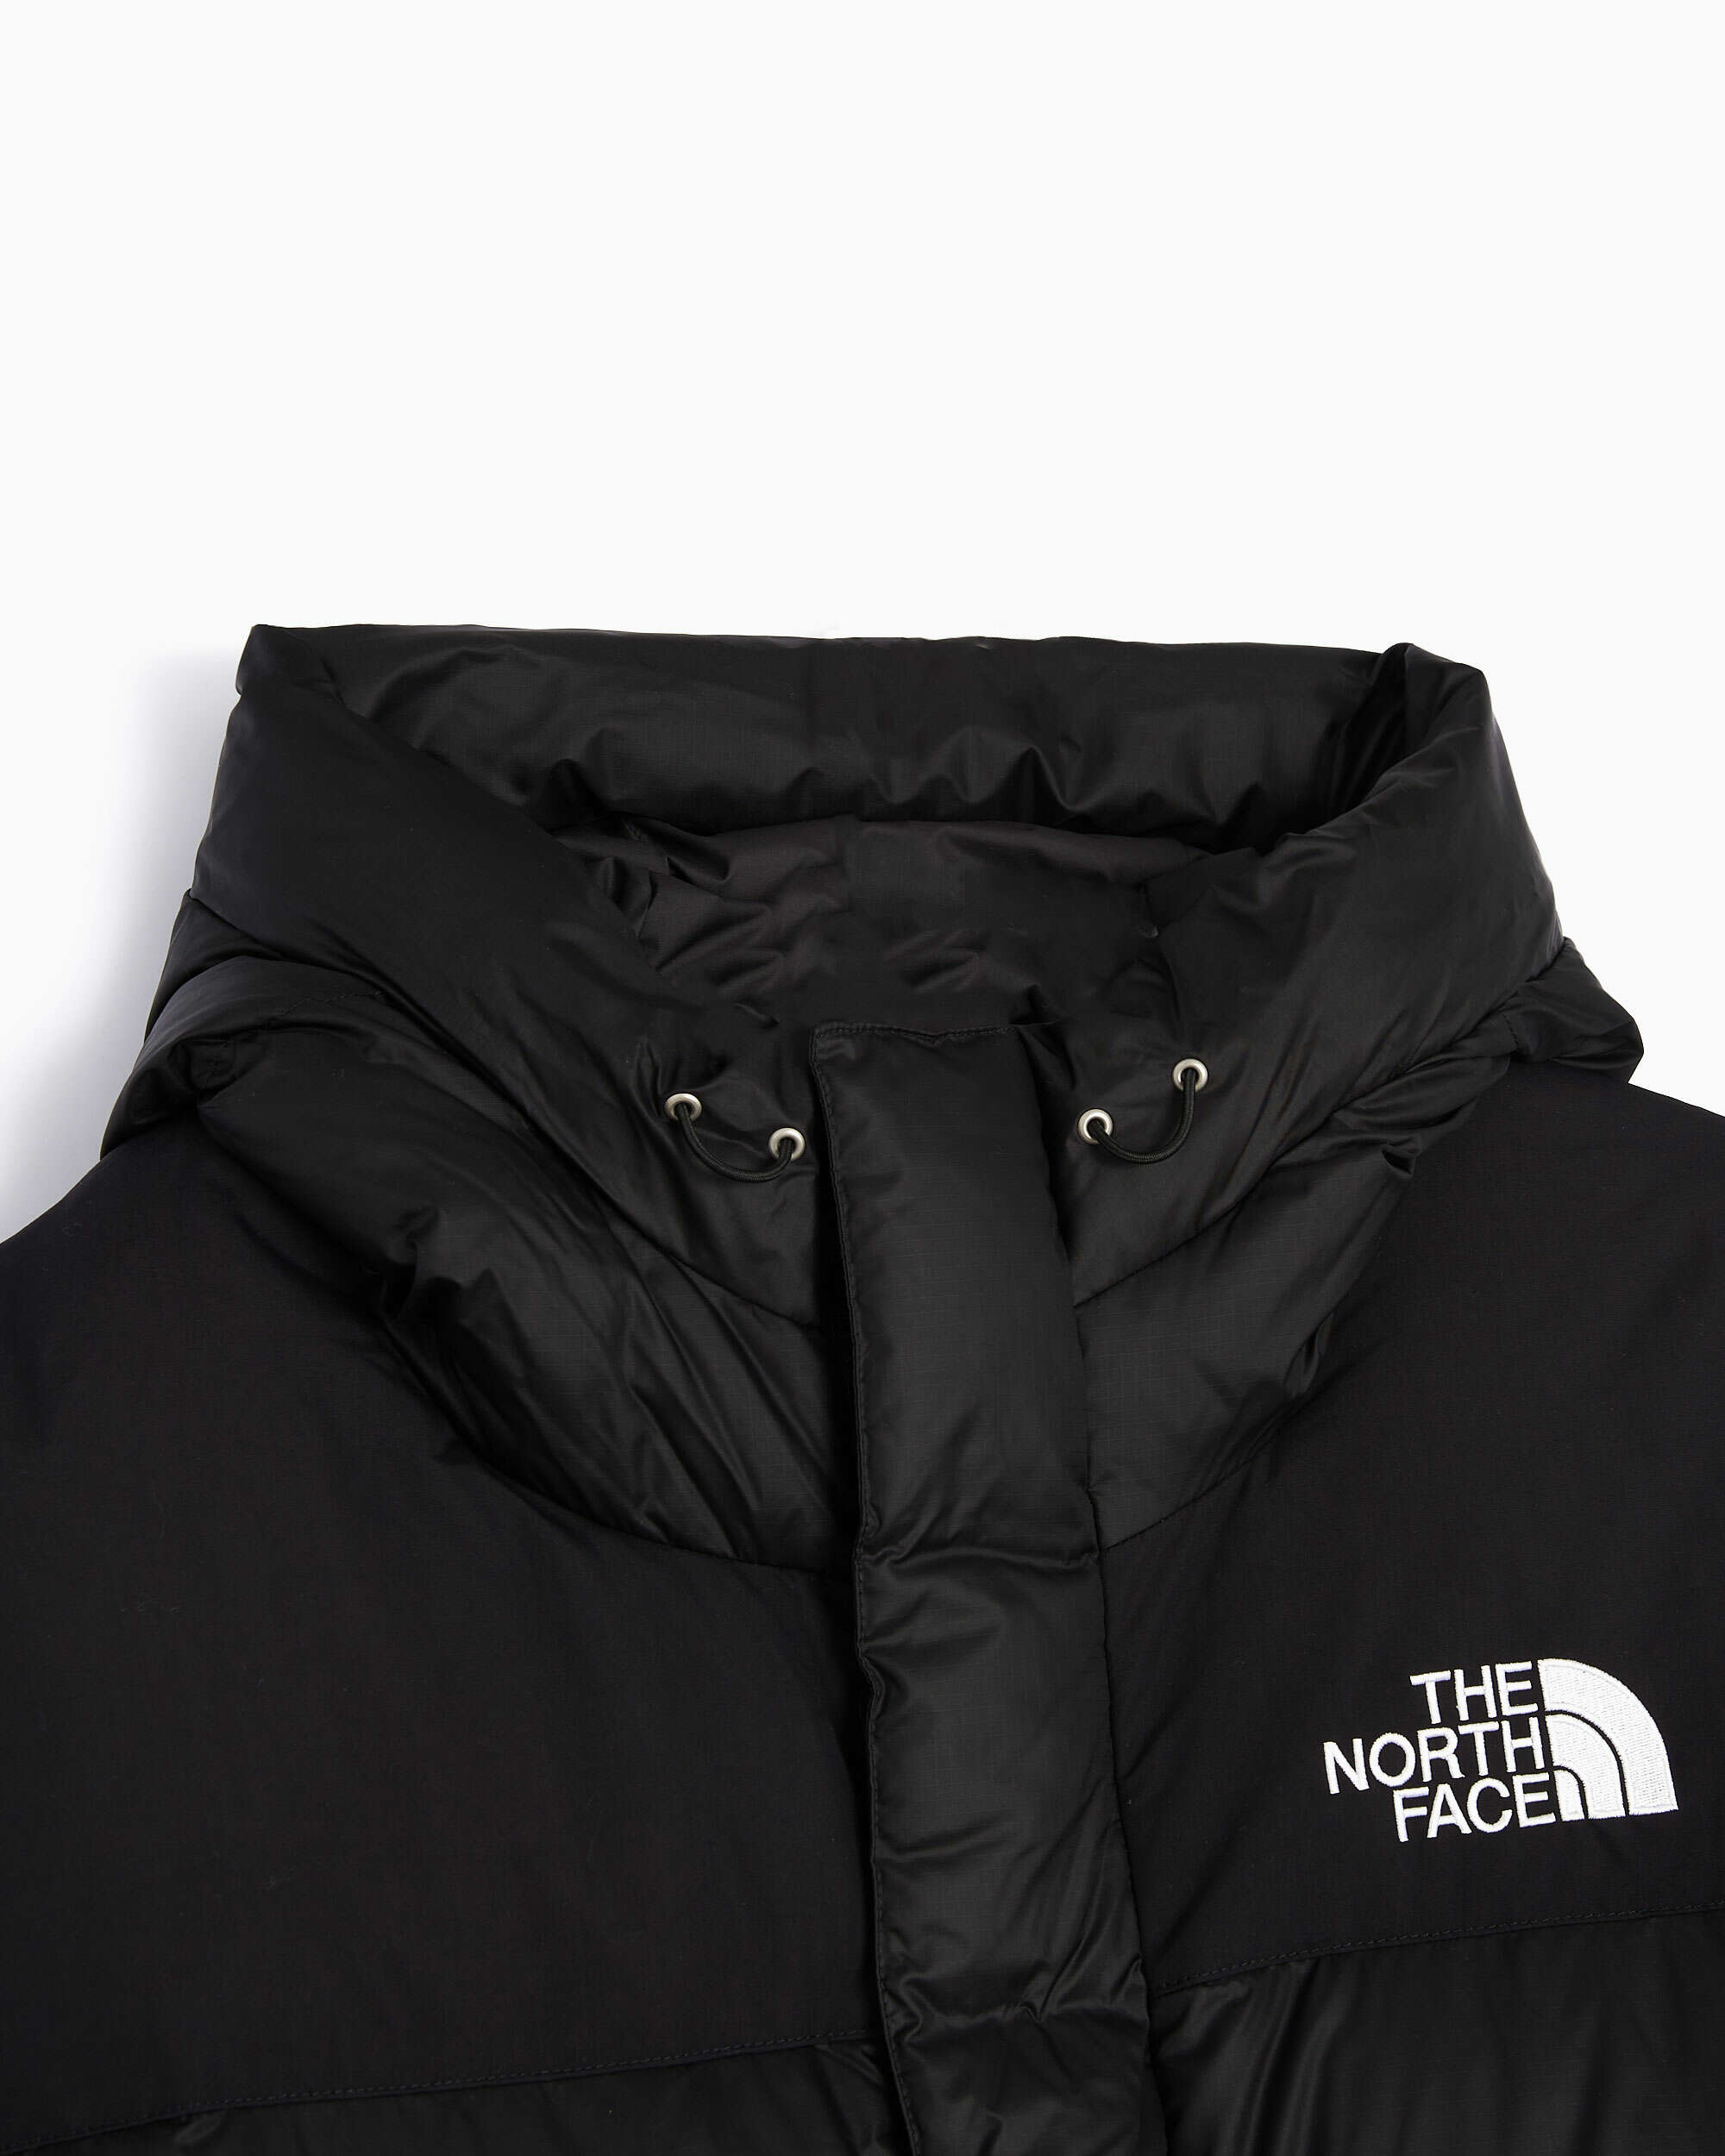 The North Face Himalayan Men's Puffer Jacket Black NF0A4QYXJK31